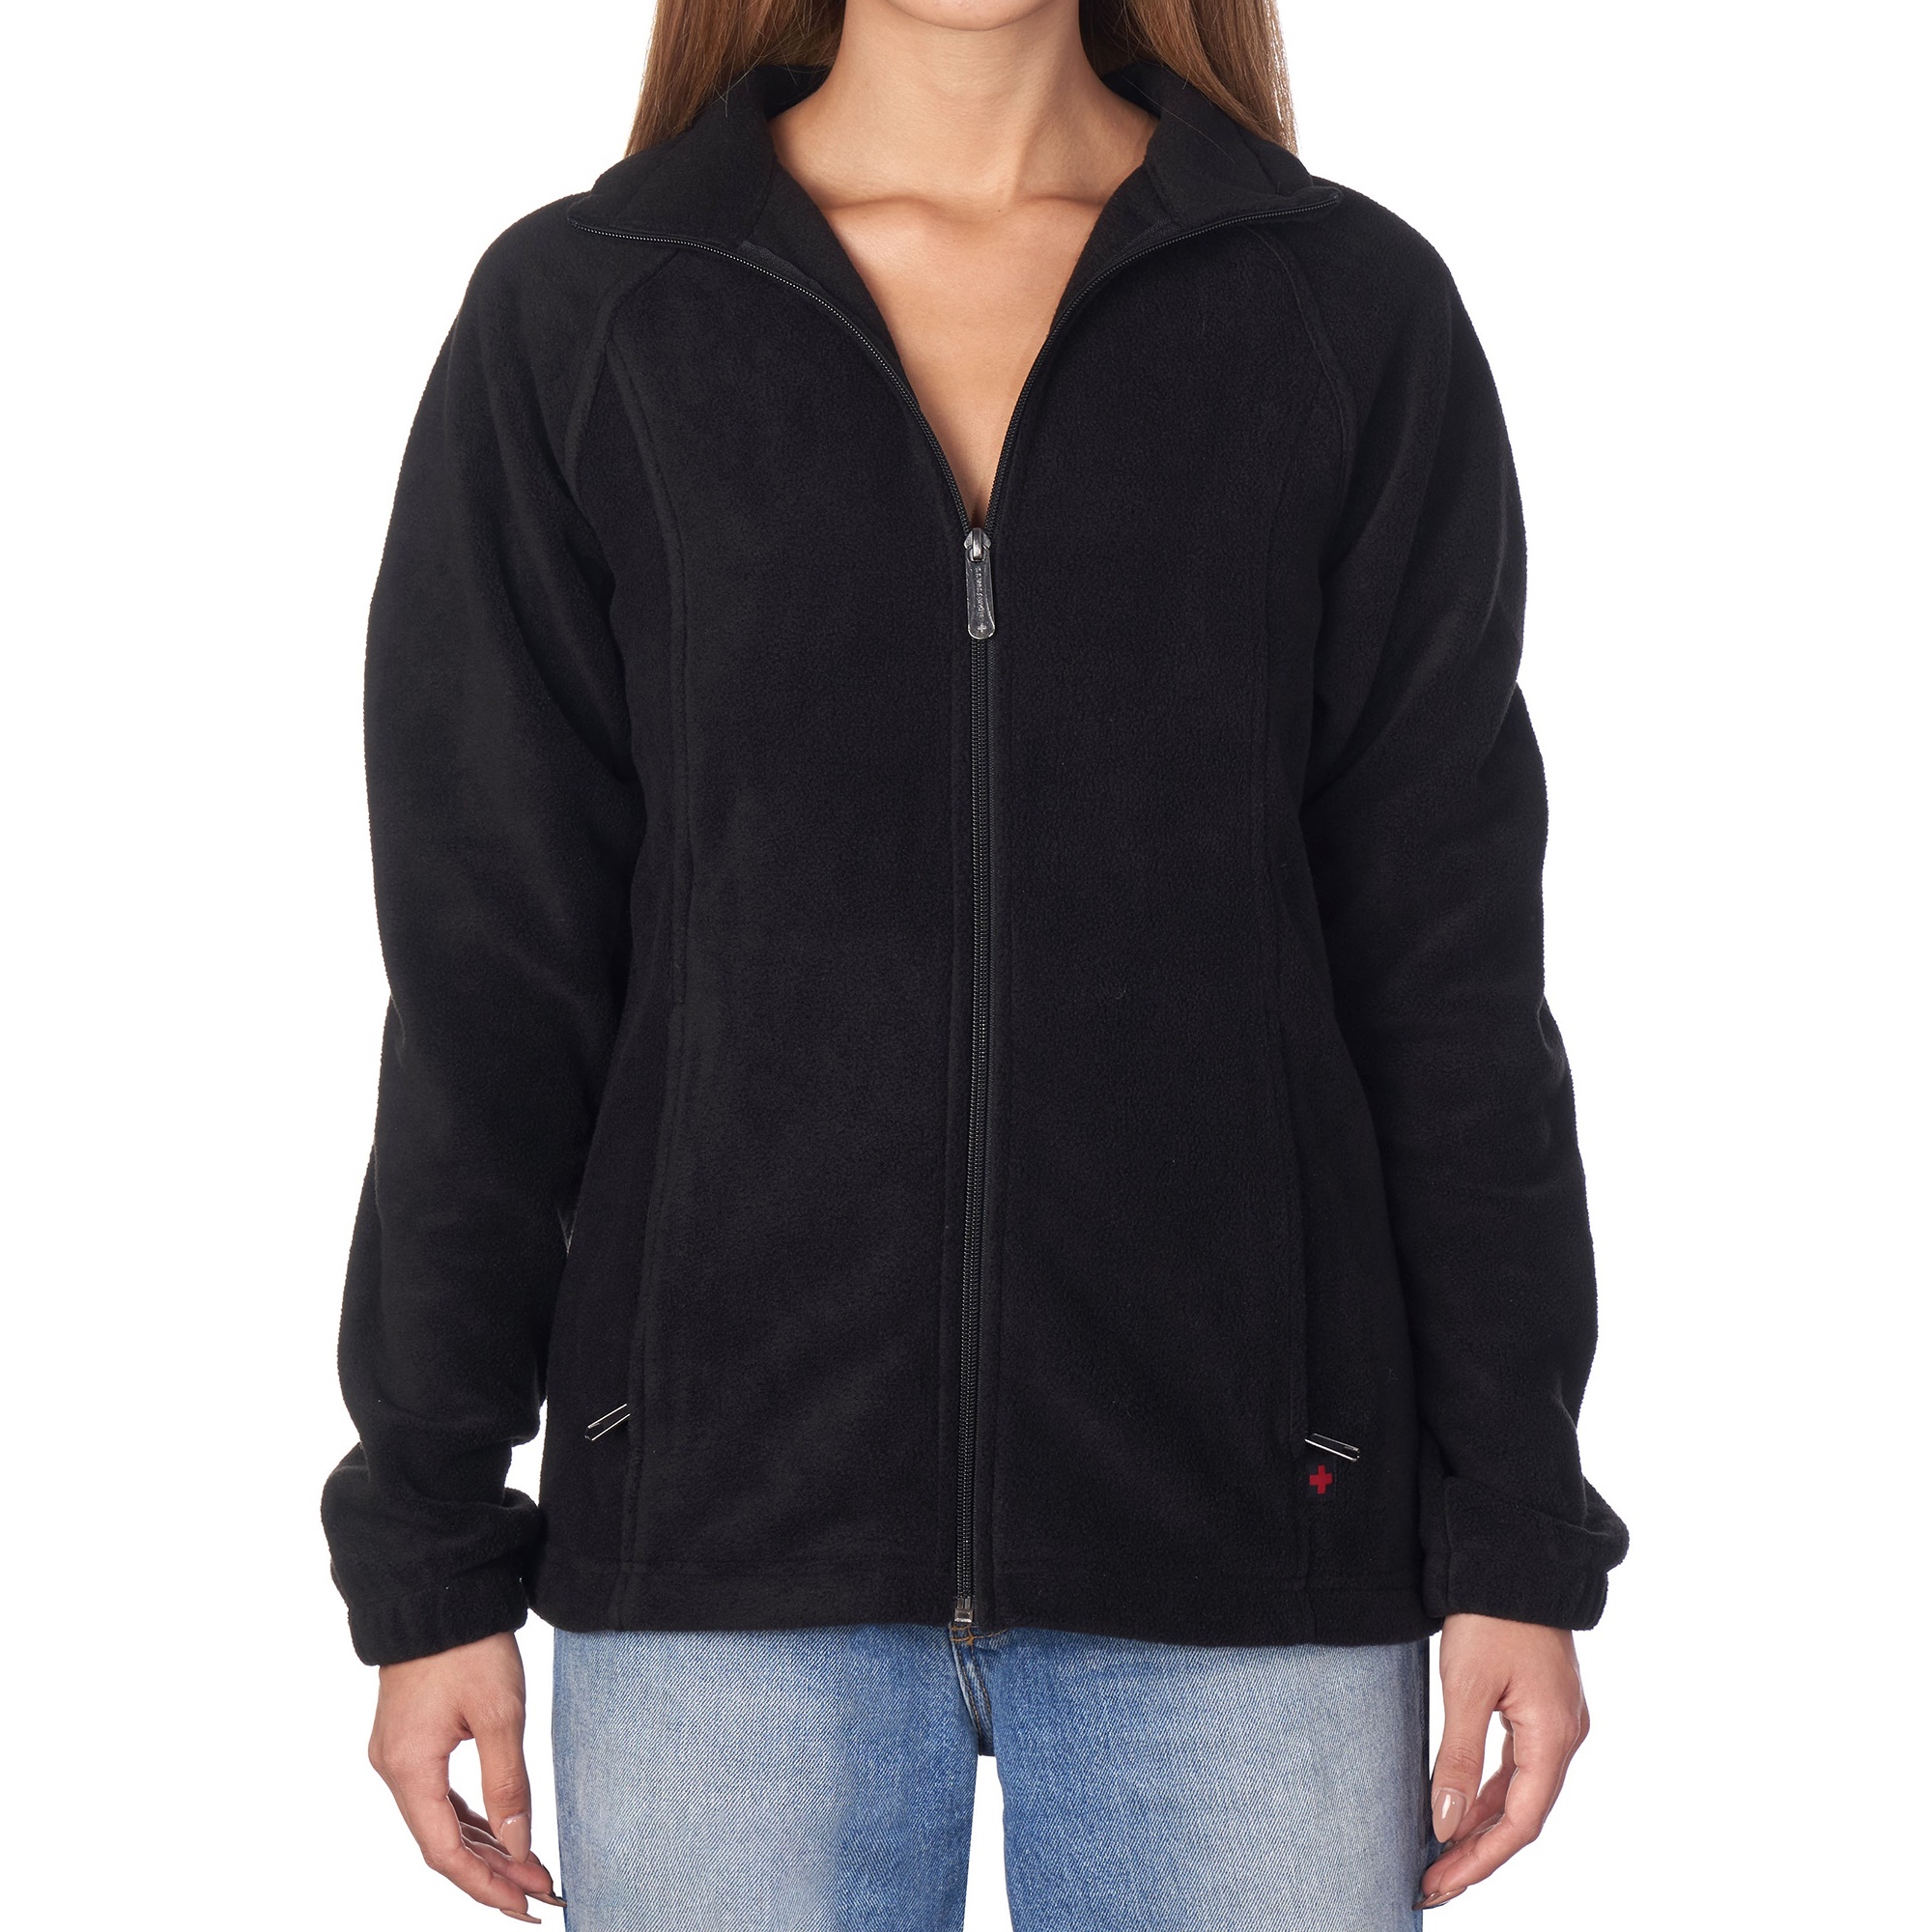 Women's Tall Polar Fleece Zip Up Jacket in Natural M / Extra Tall / Natural